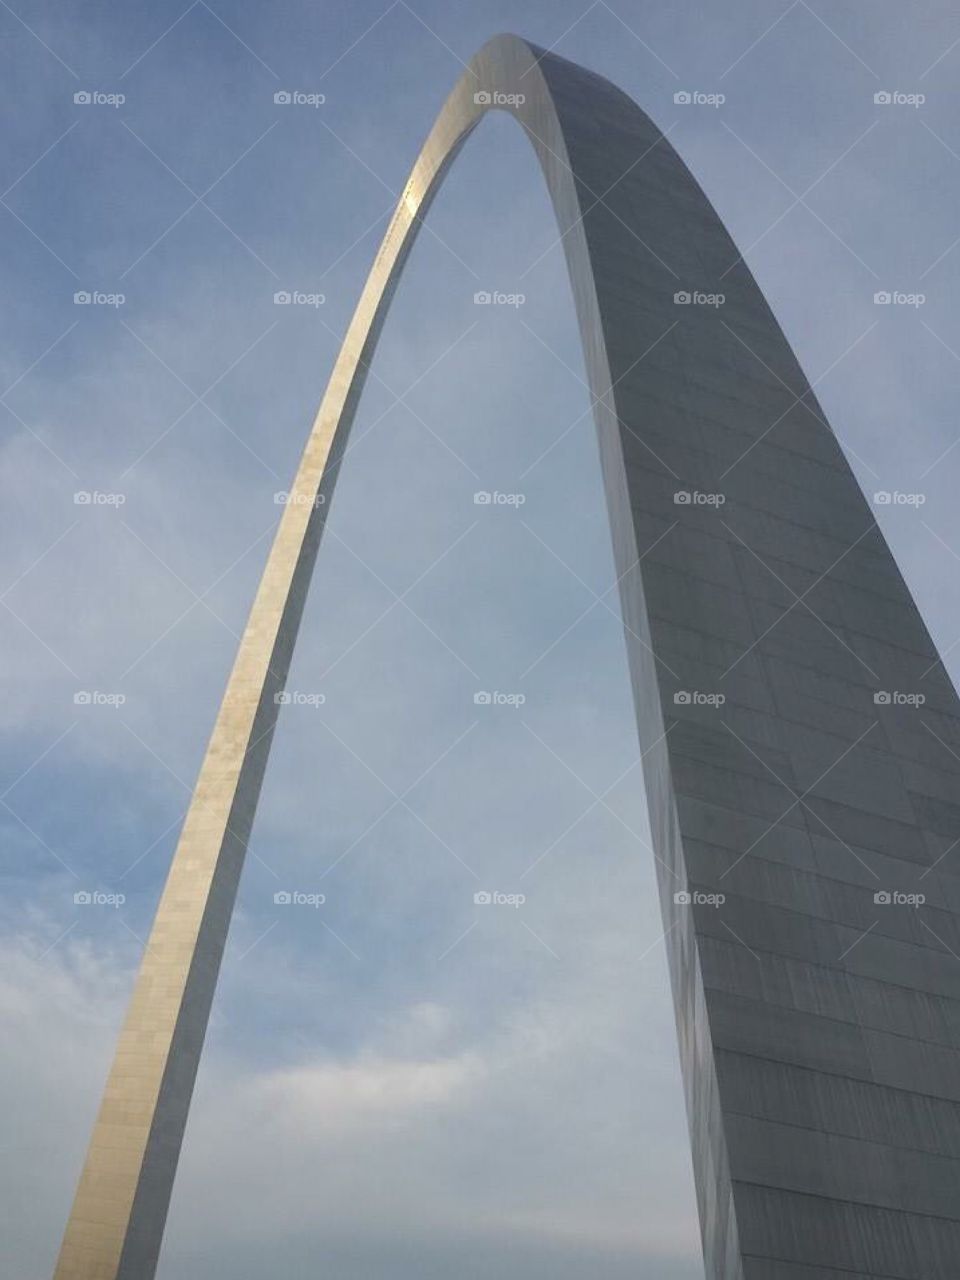 St Louis
